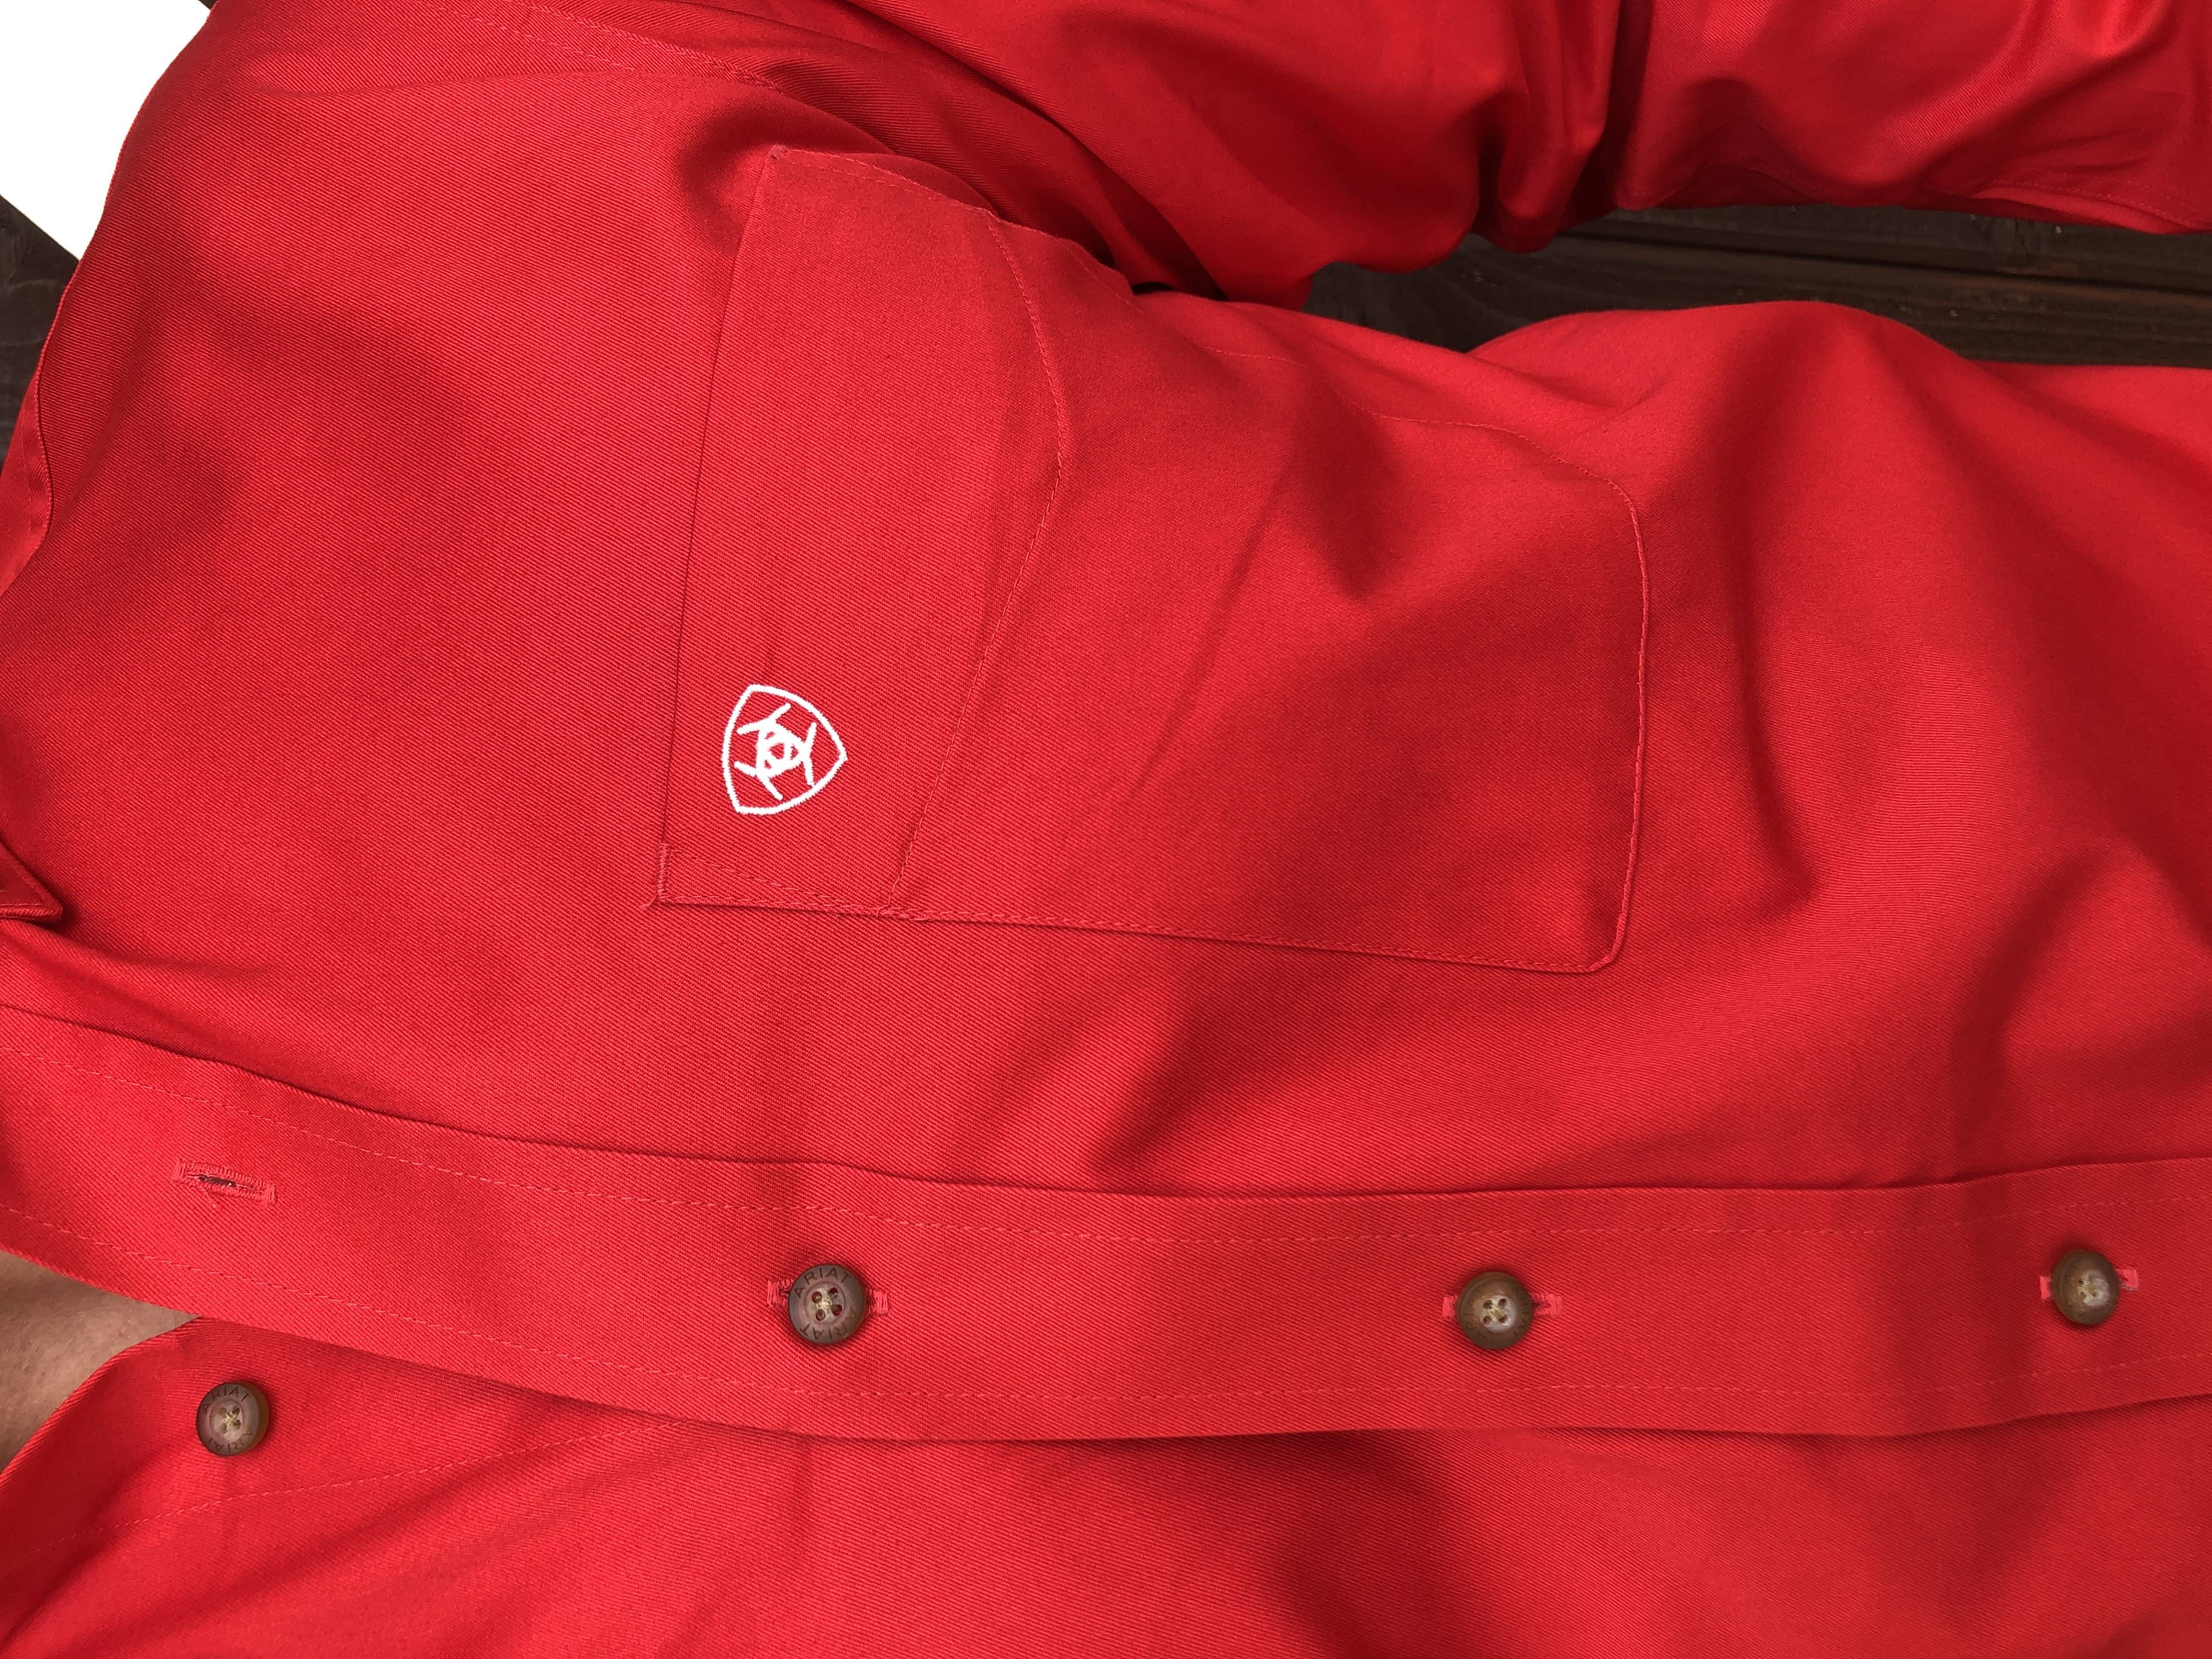 ARIAT - MEN'S Marketing Shirt (Red / White )